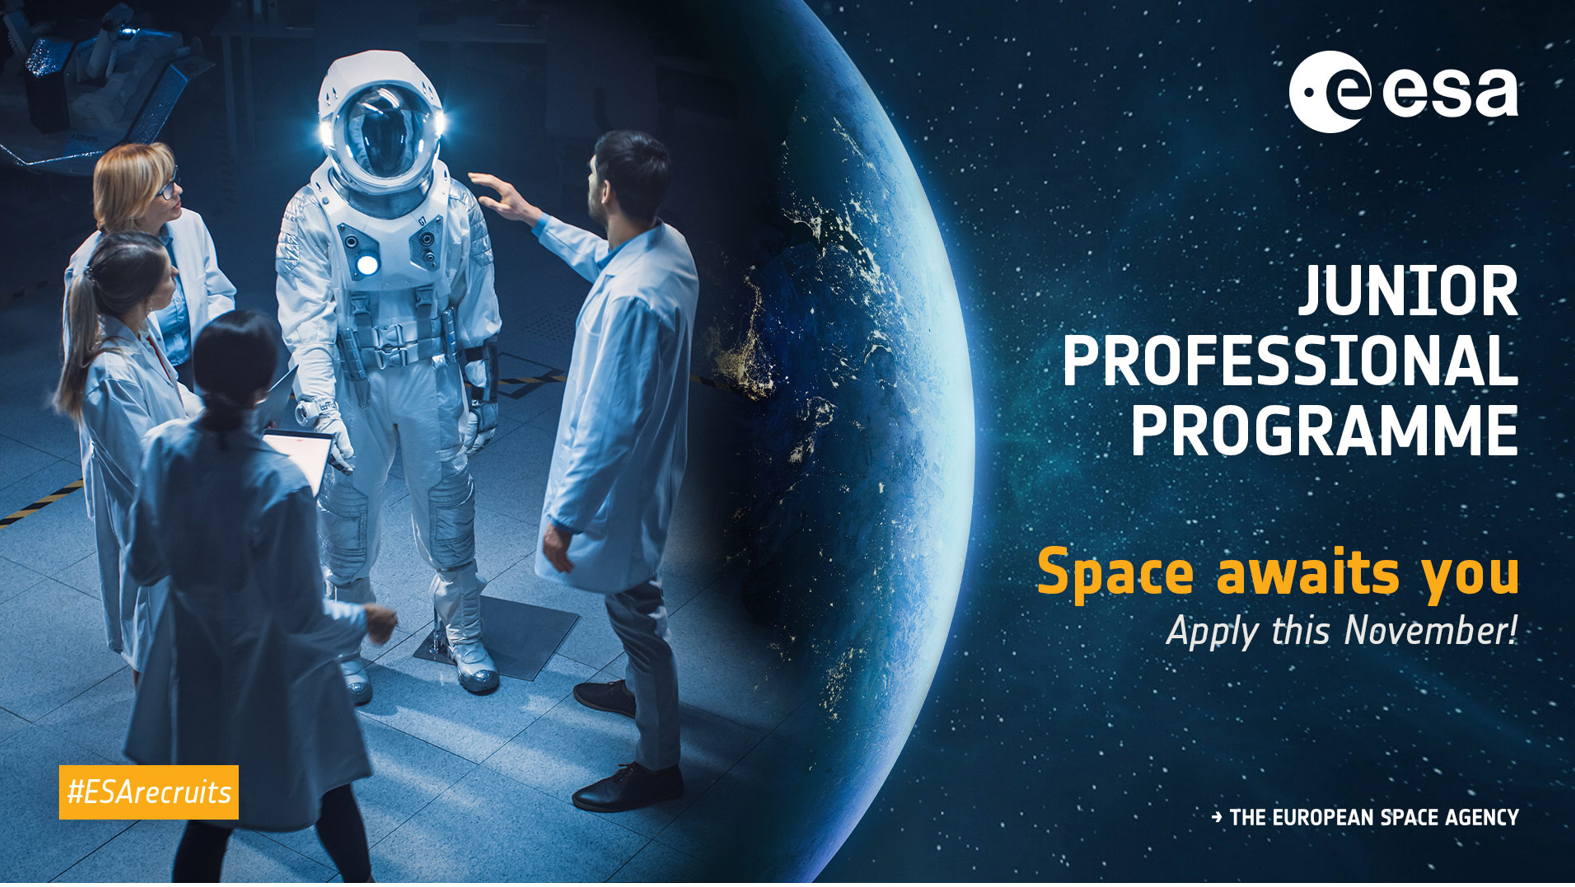 ESA's New Junior Professional Programme